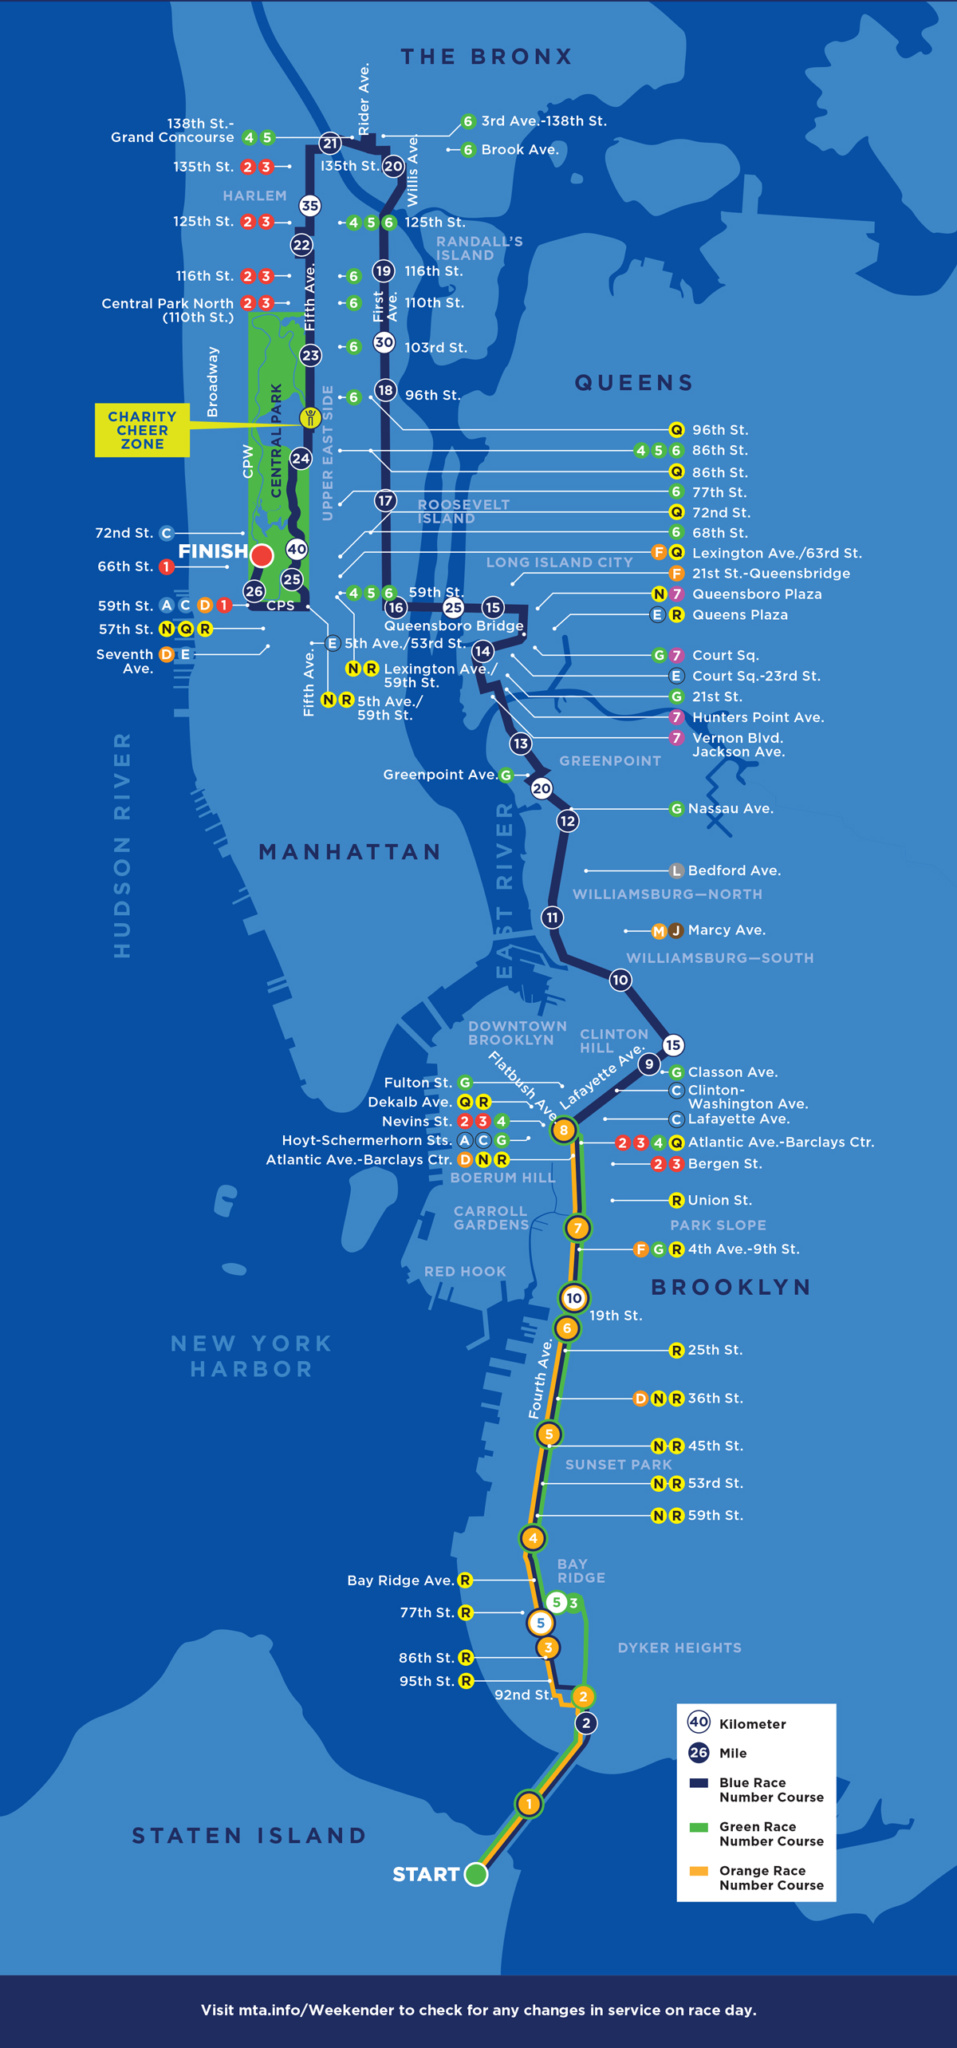 see how the city terrain within the world marathon majors